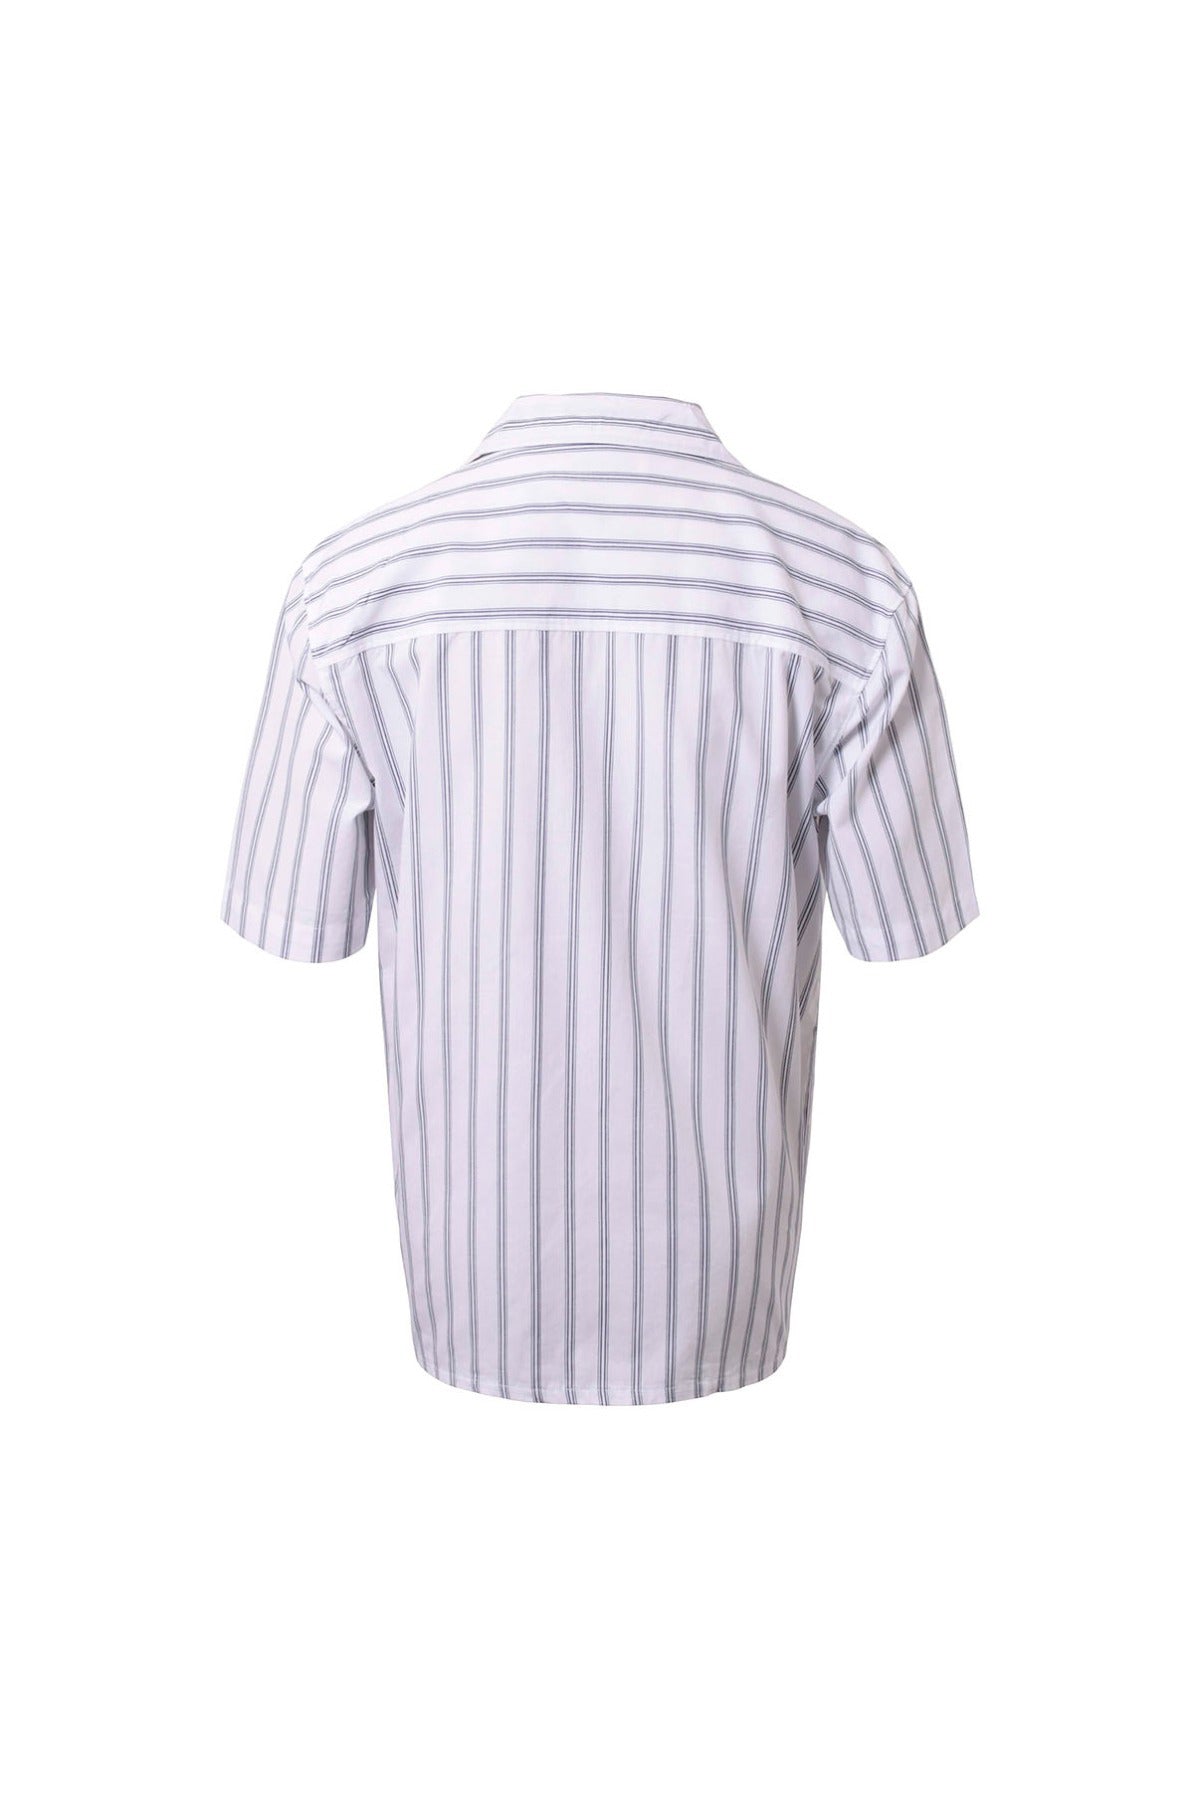 Hound Shirt SS Striped